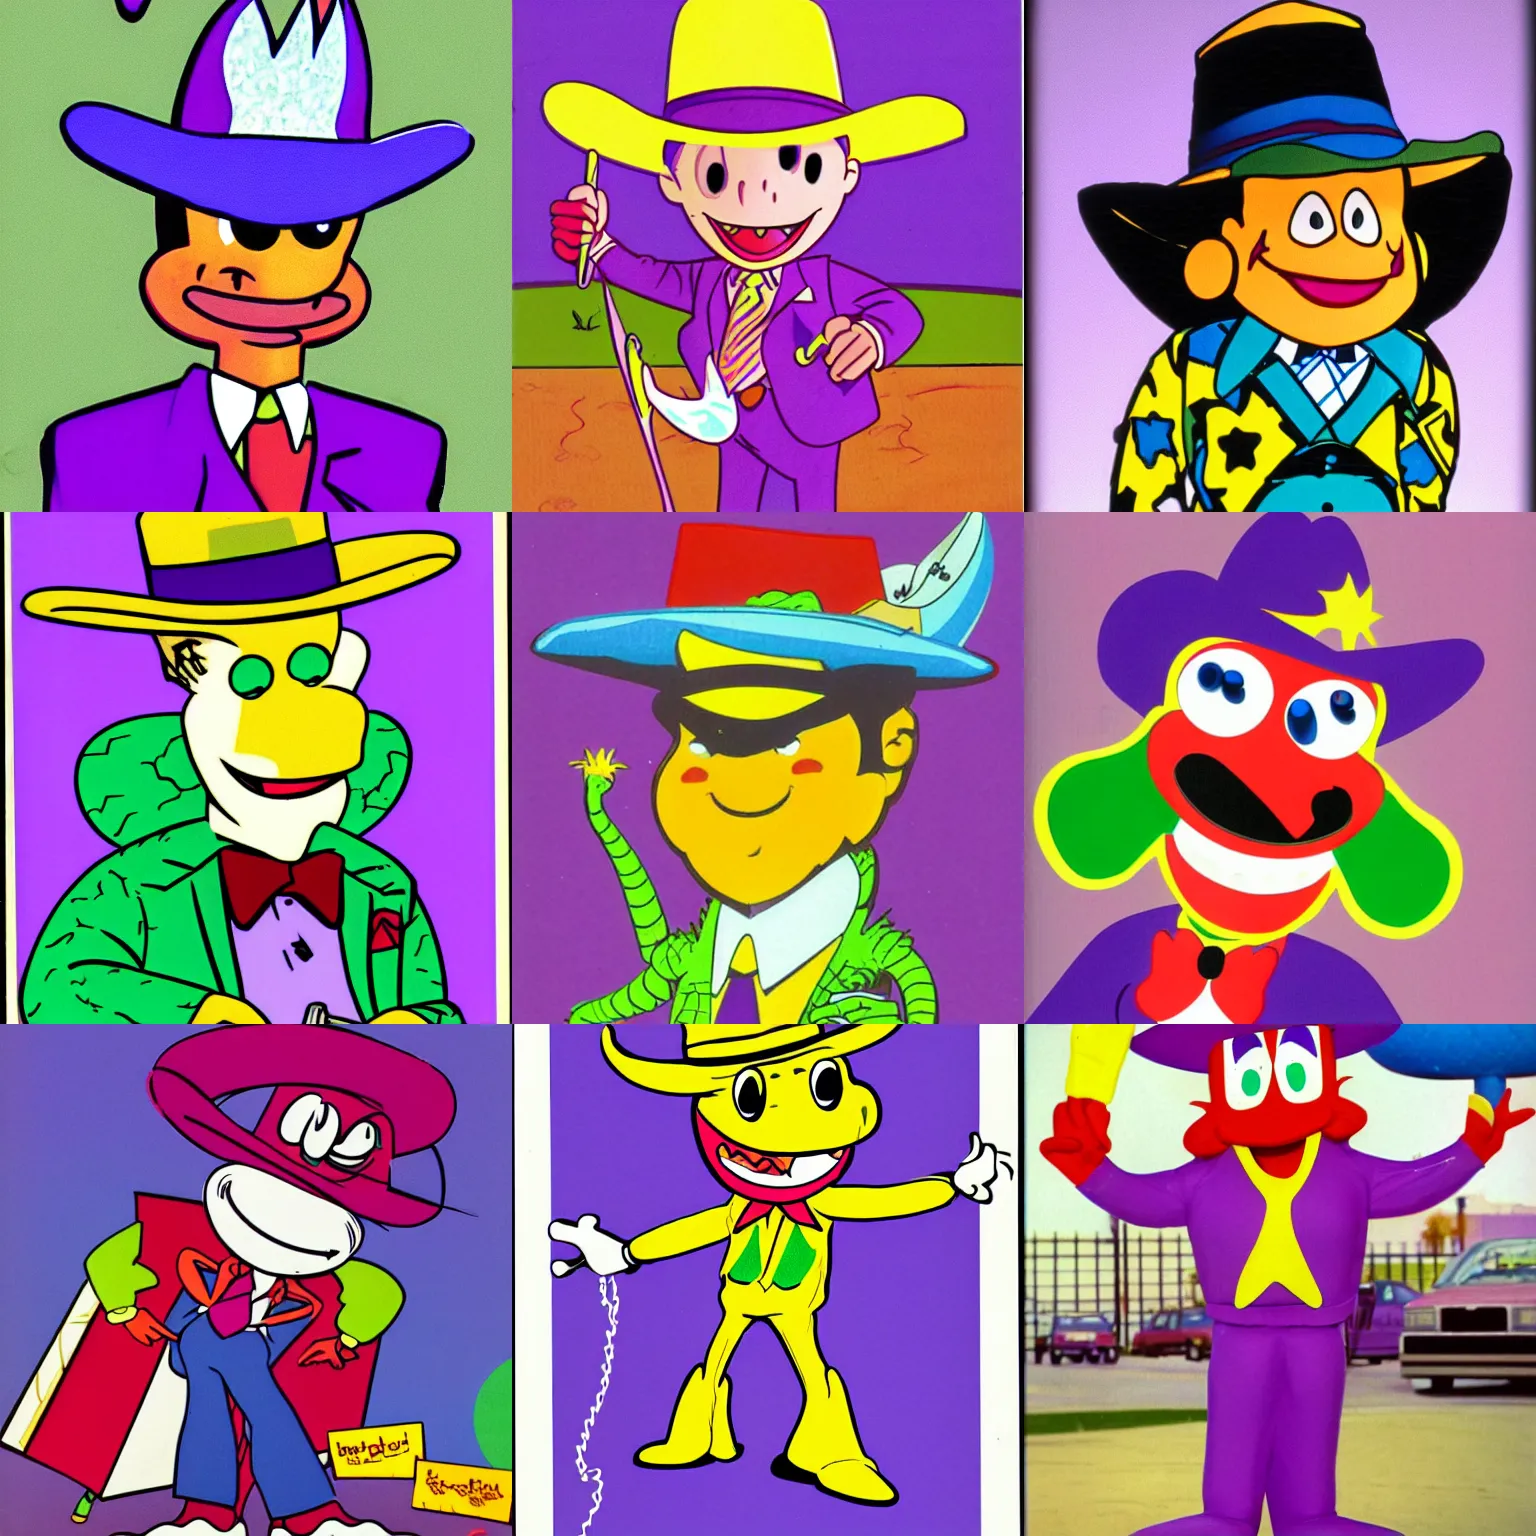 Prompt: 1990's childrens cartoon cereal mascot resembling a purple alligator cowboy salesman